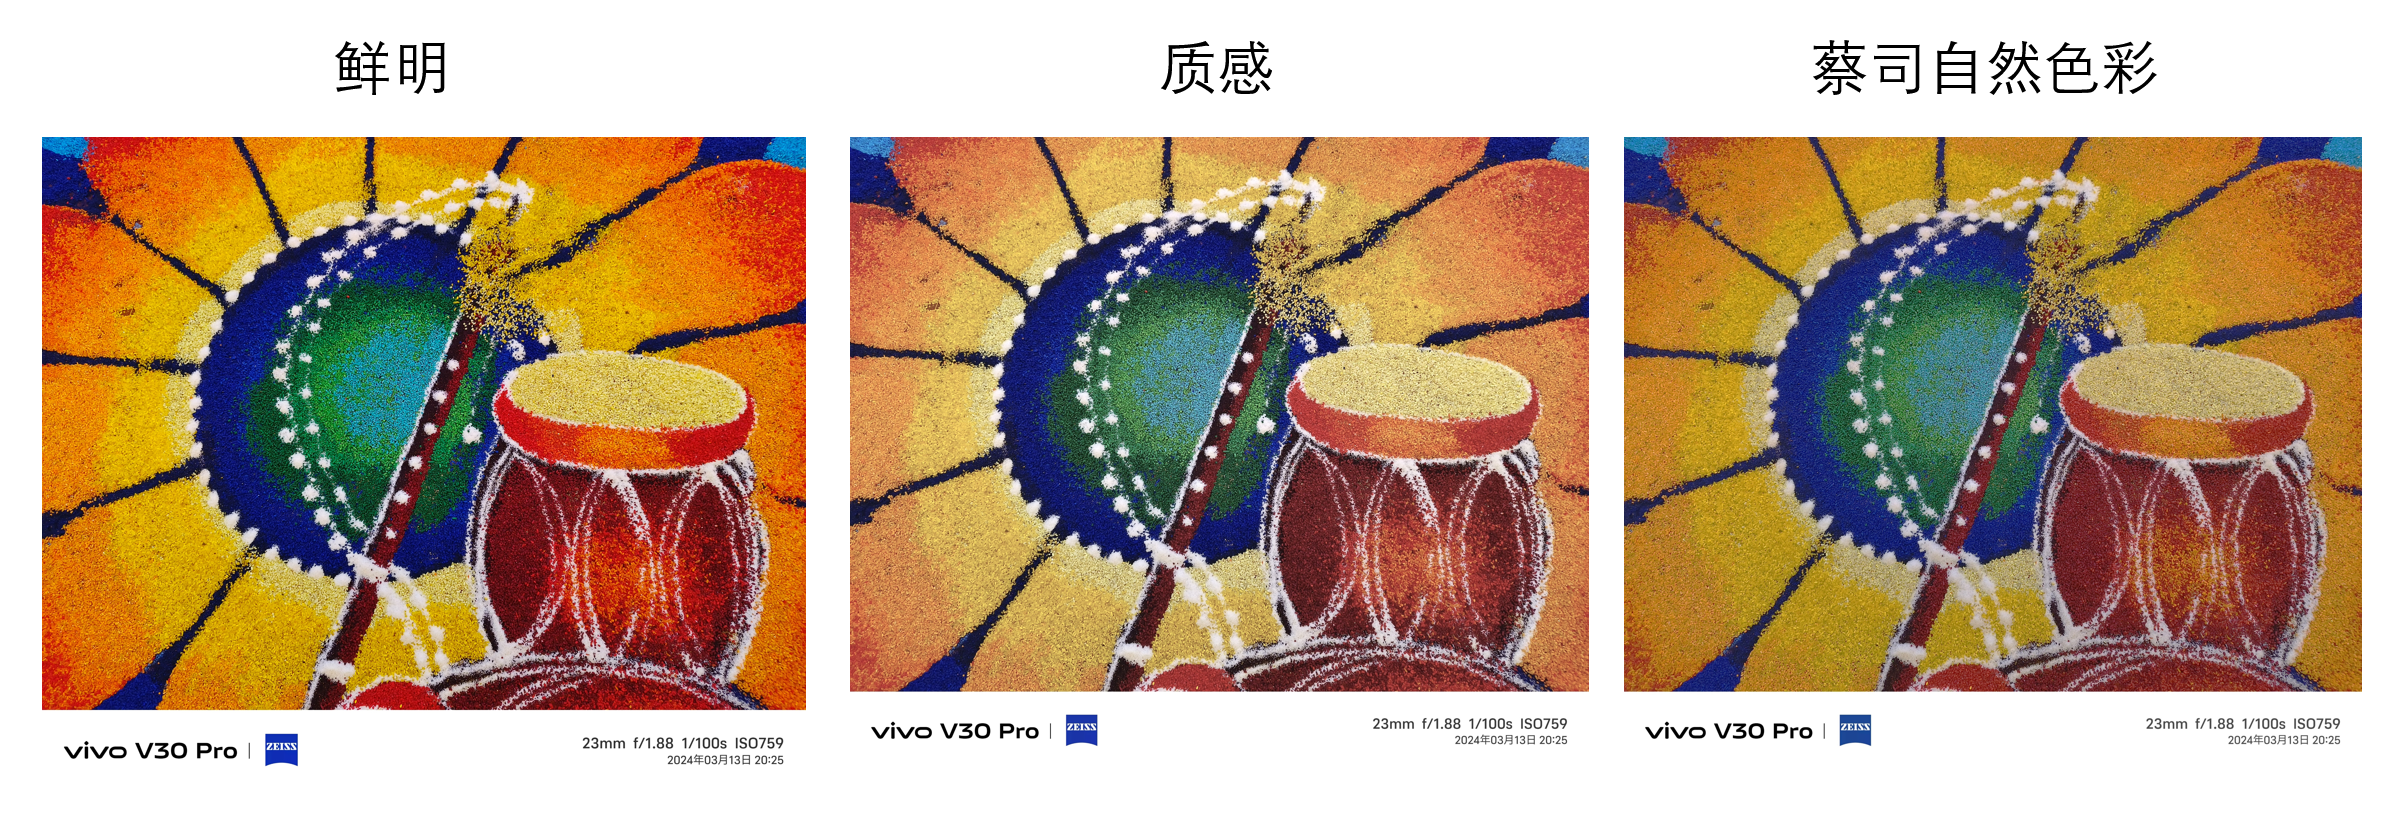 vivo V30 Pro：蔡司三摄+柔光环人像3.0，专业摄影普及化的里程碑 28